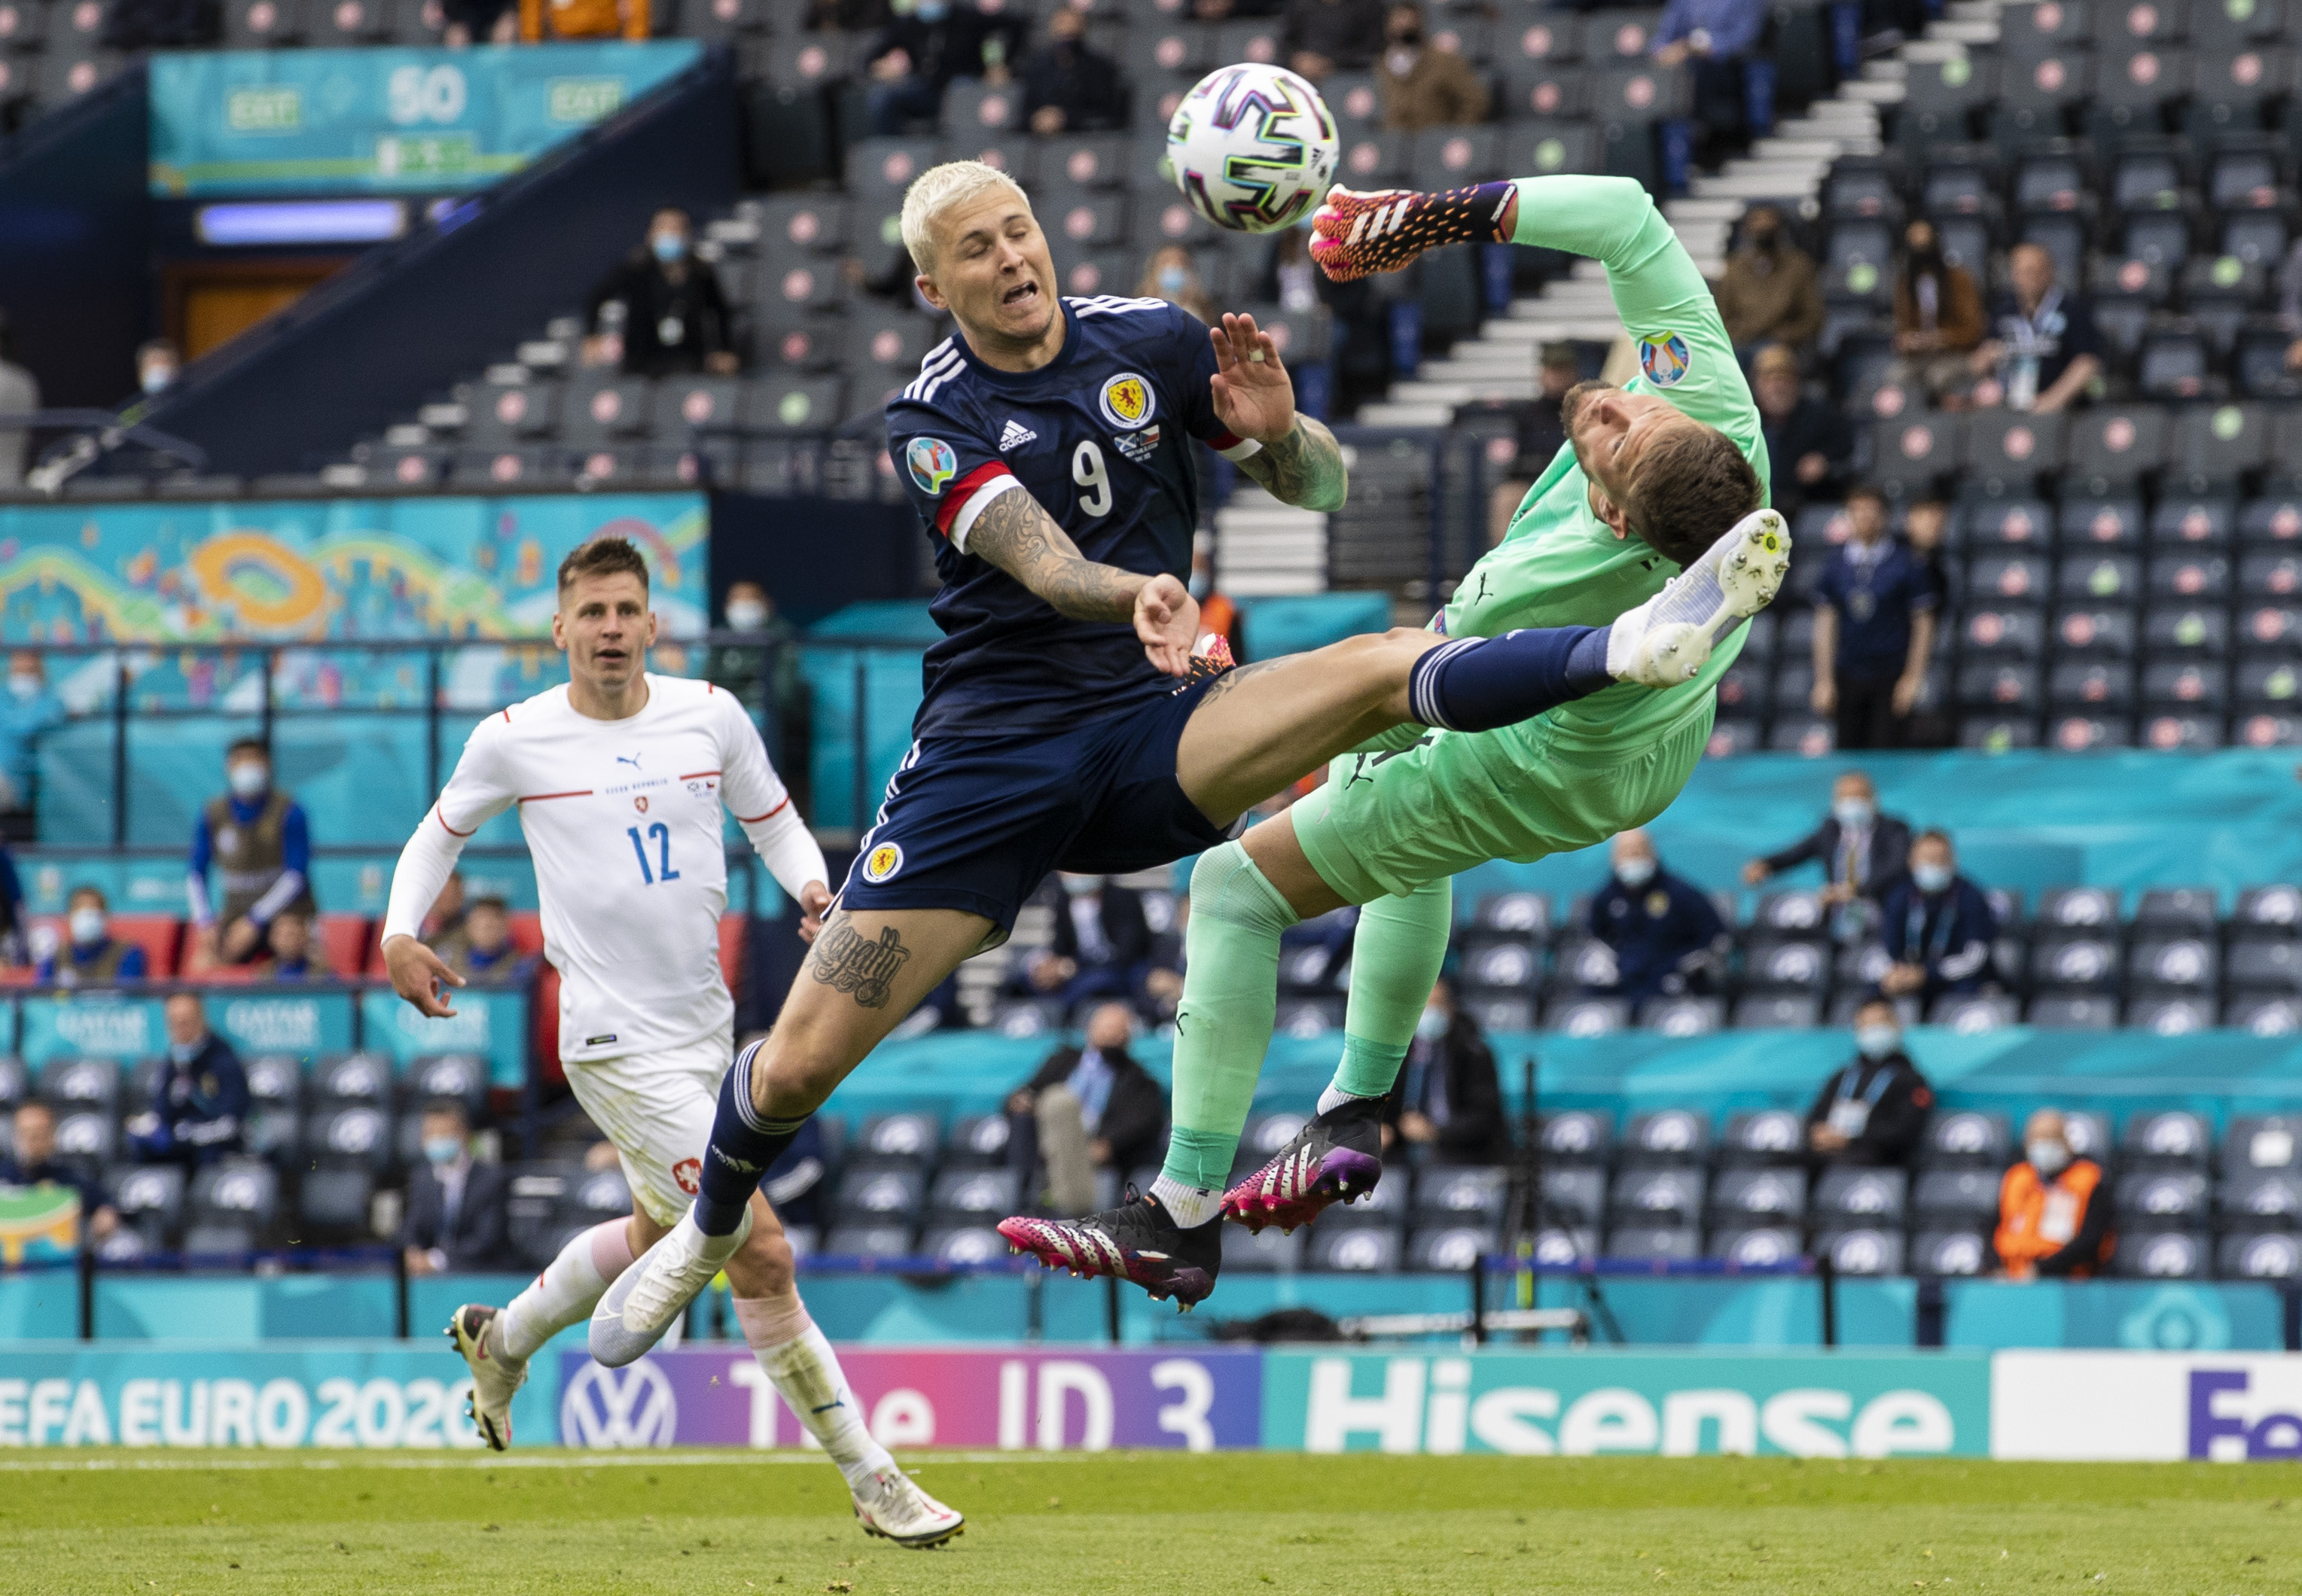 Lyndon Dykes battles with Tomáš Vaclík as the ball loops towards goal during the Euro 2020 match.